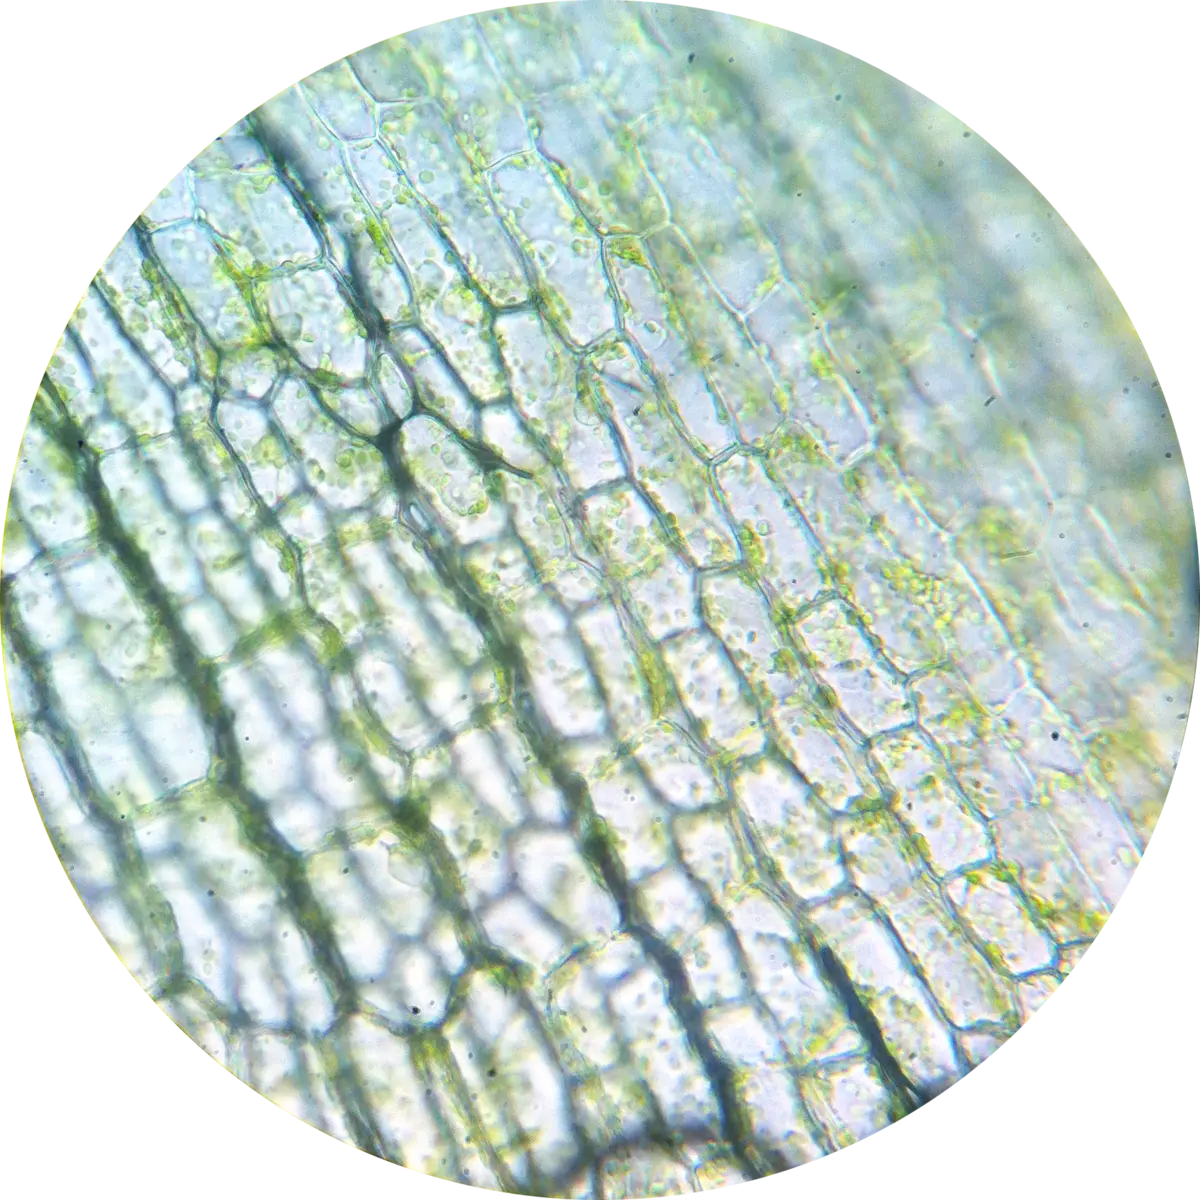 Los cristales en la célula vegetal: estructuras sorprendentes